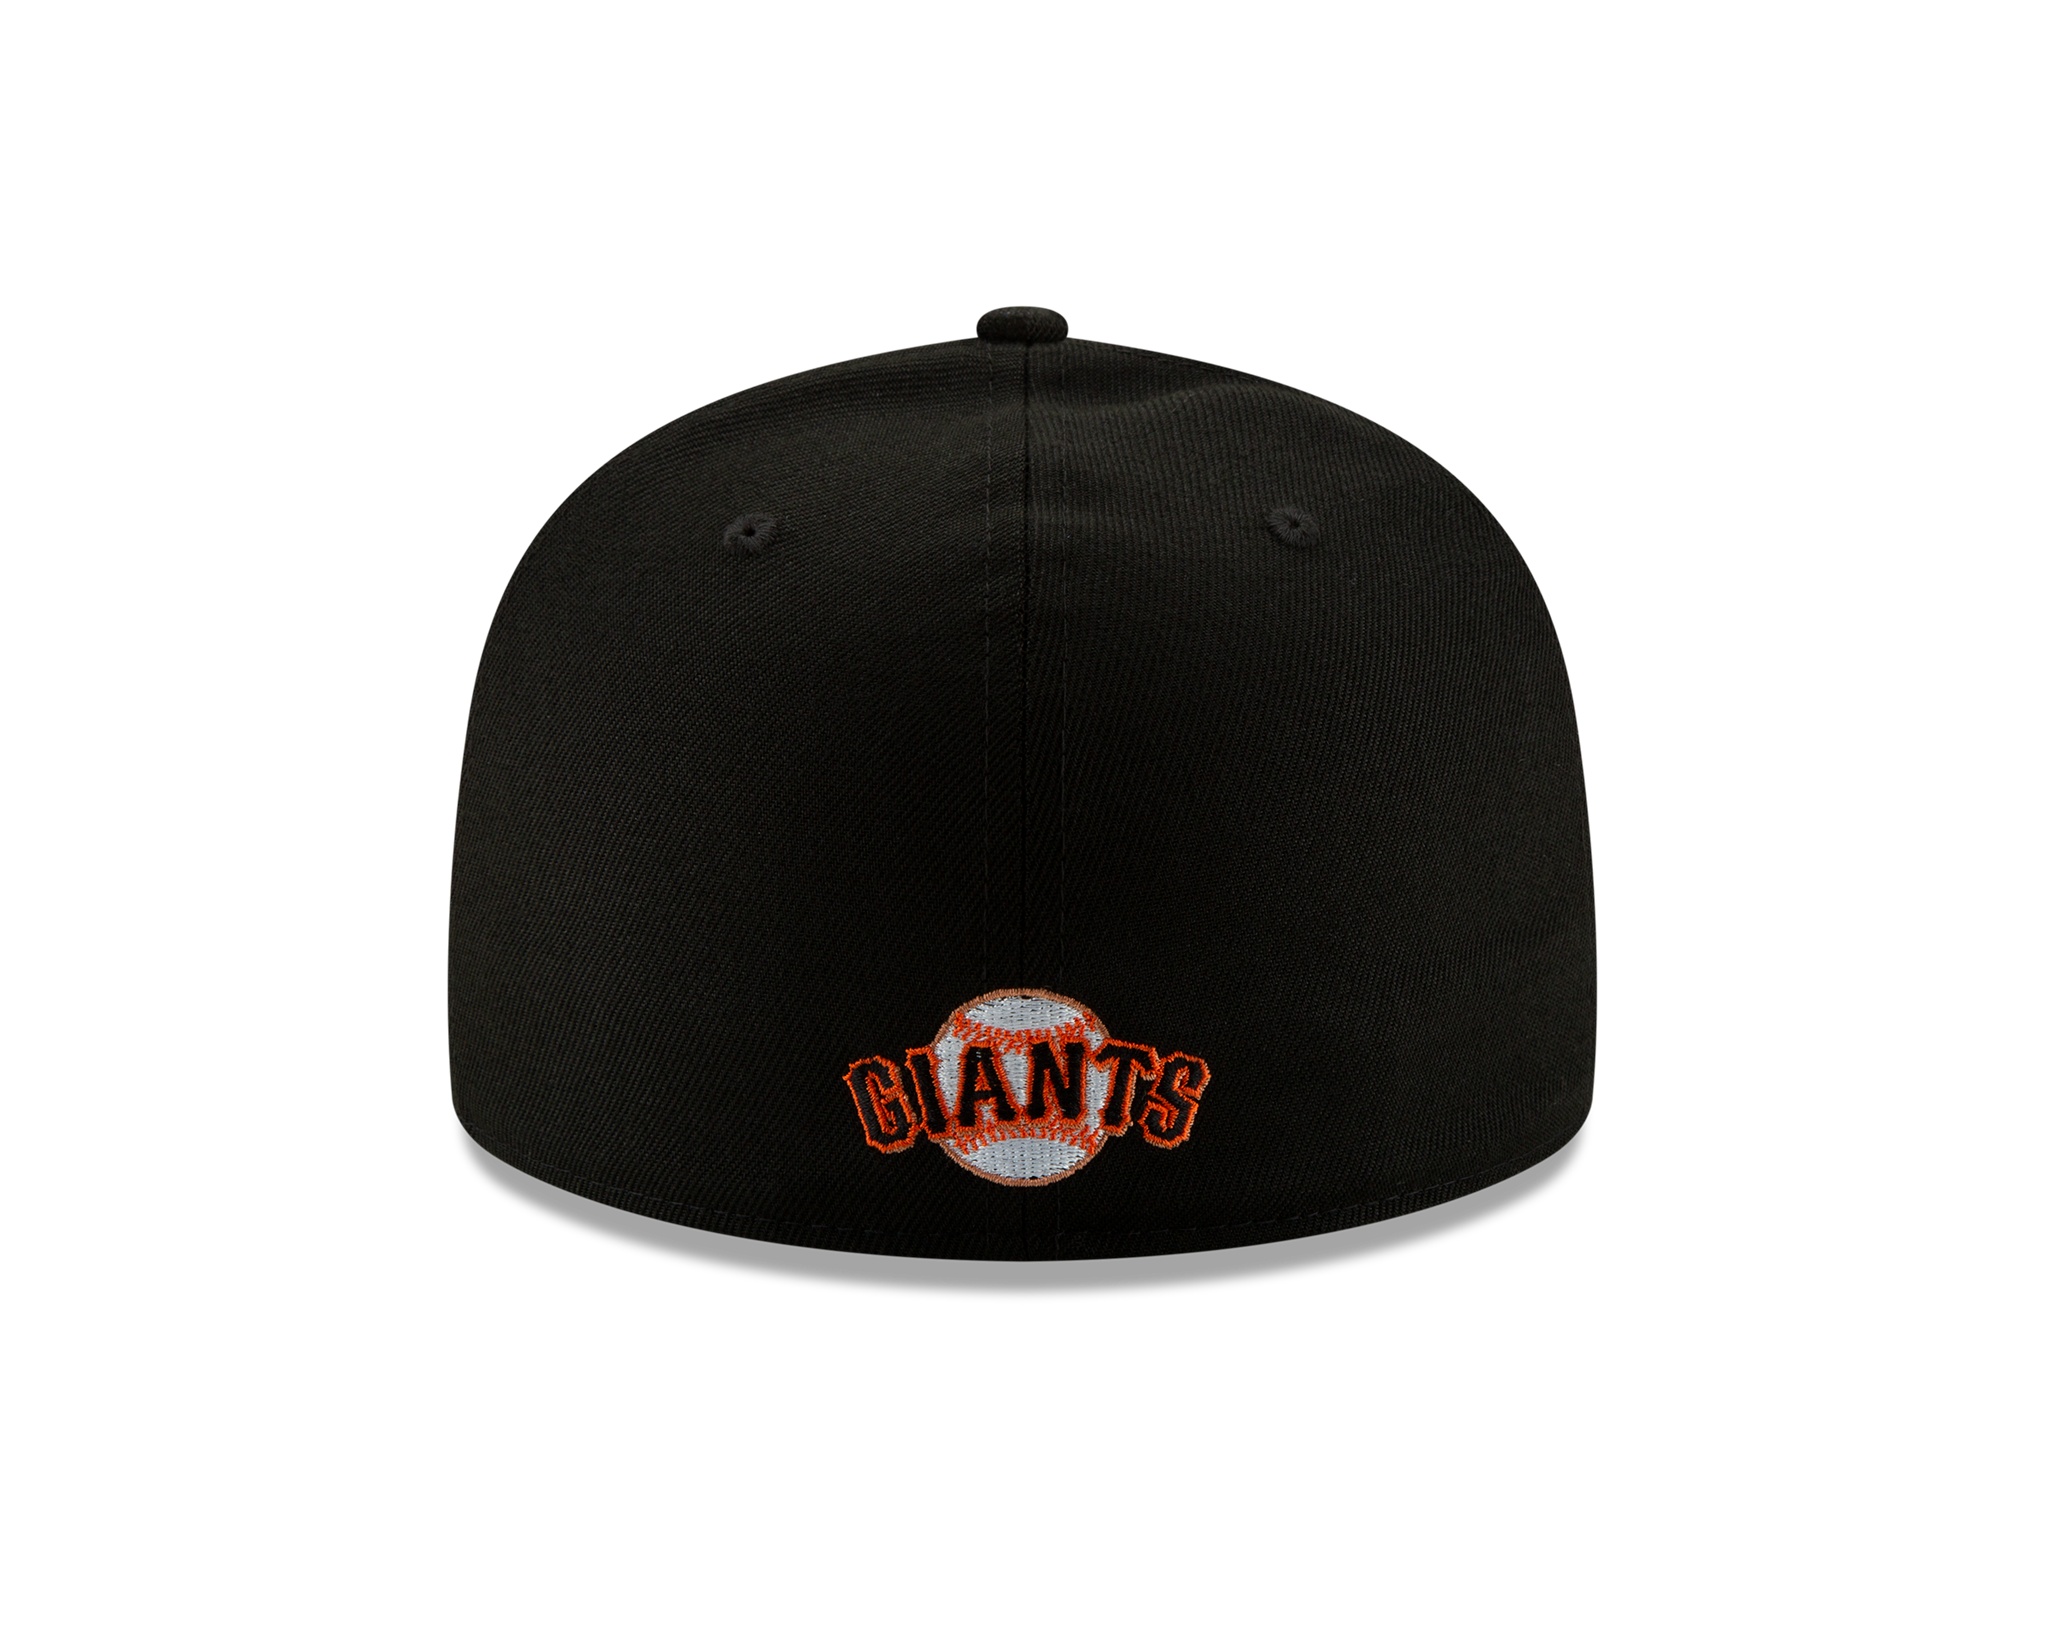 San Francisco Giants Hats in San Francisco Giants Team Shop 